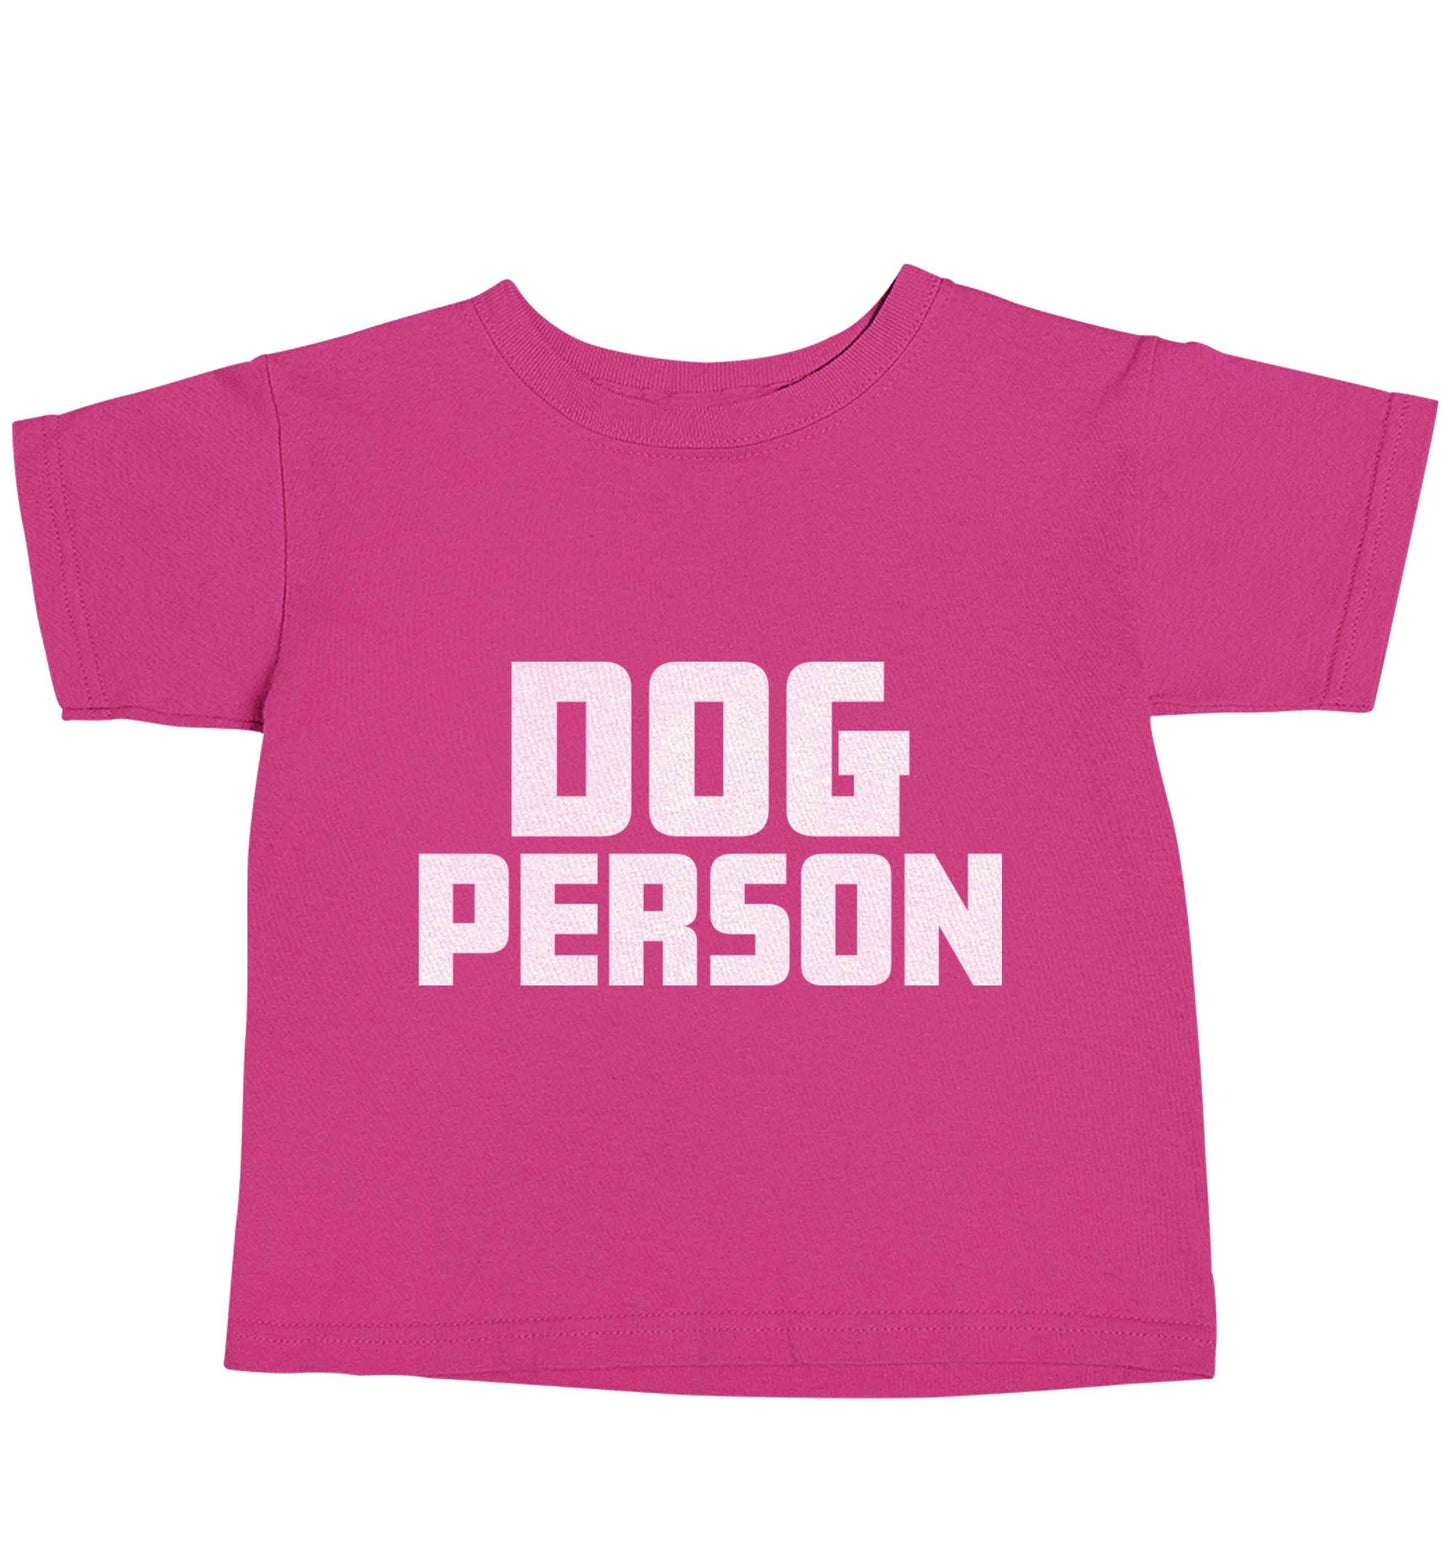 Dog Person Kit pink baby toddler Tshirt 2 Years